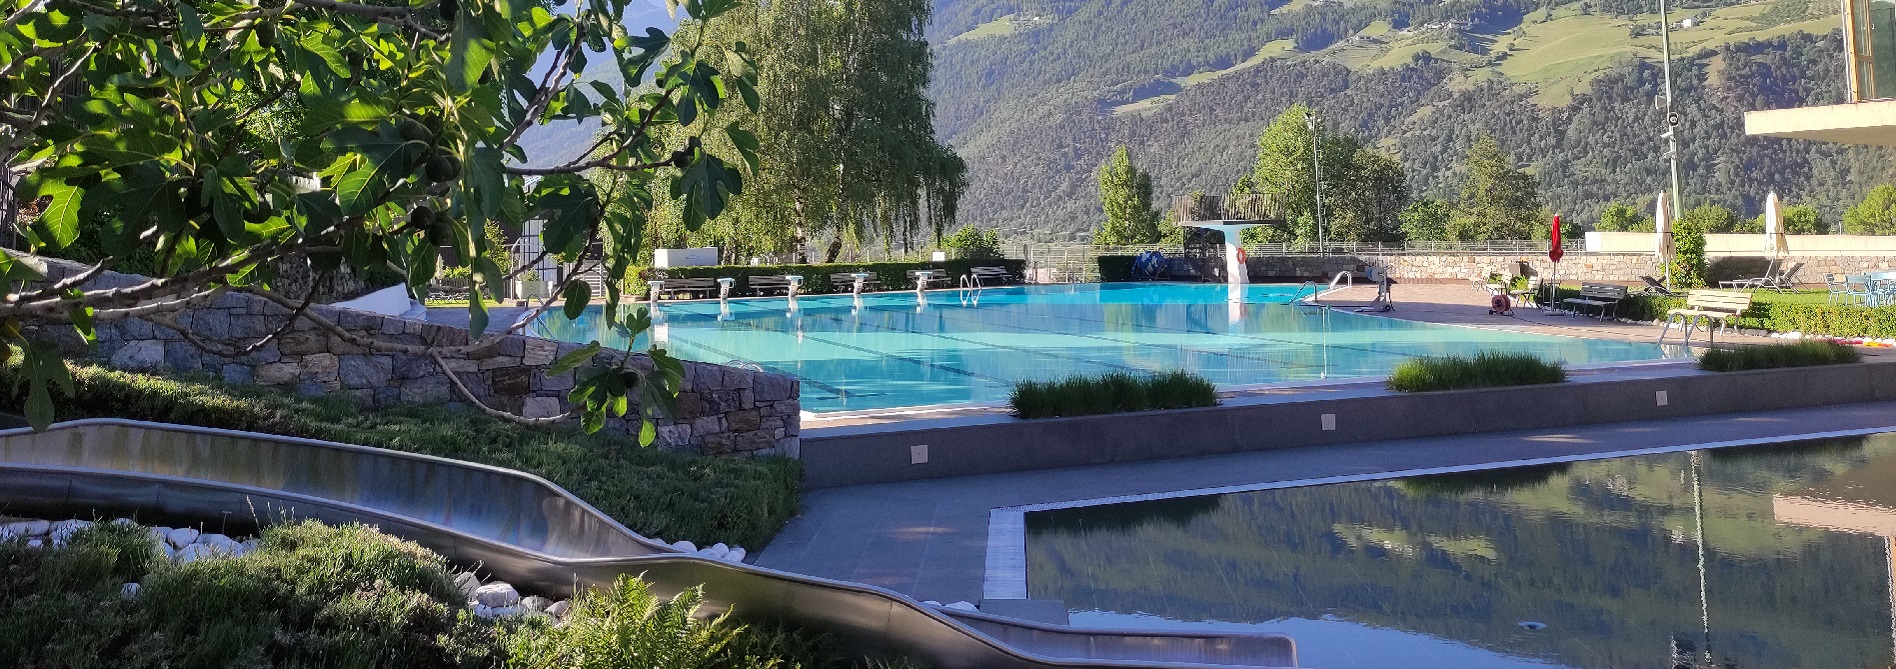 Silandro outdoor swimming pool